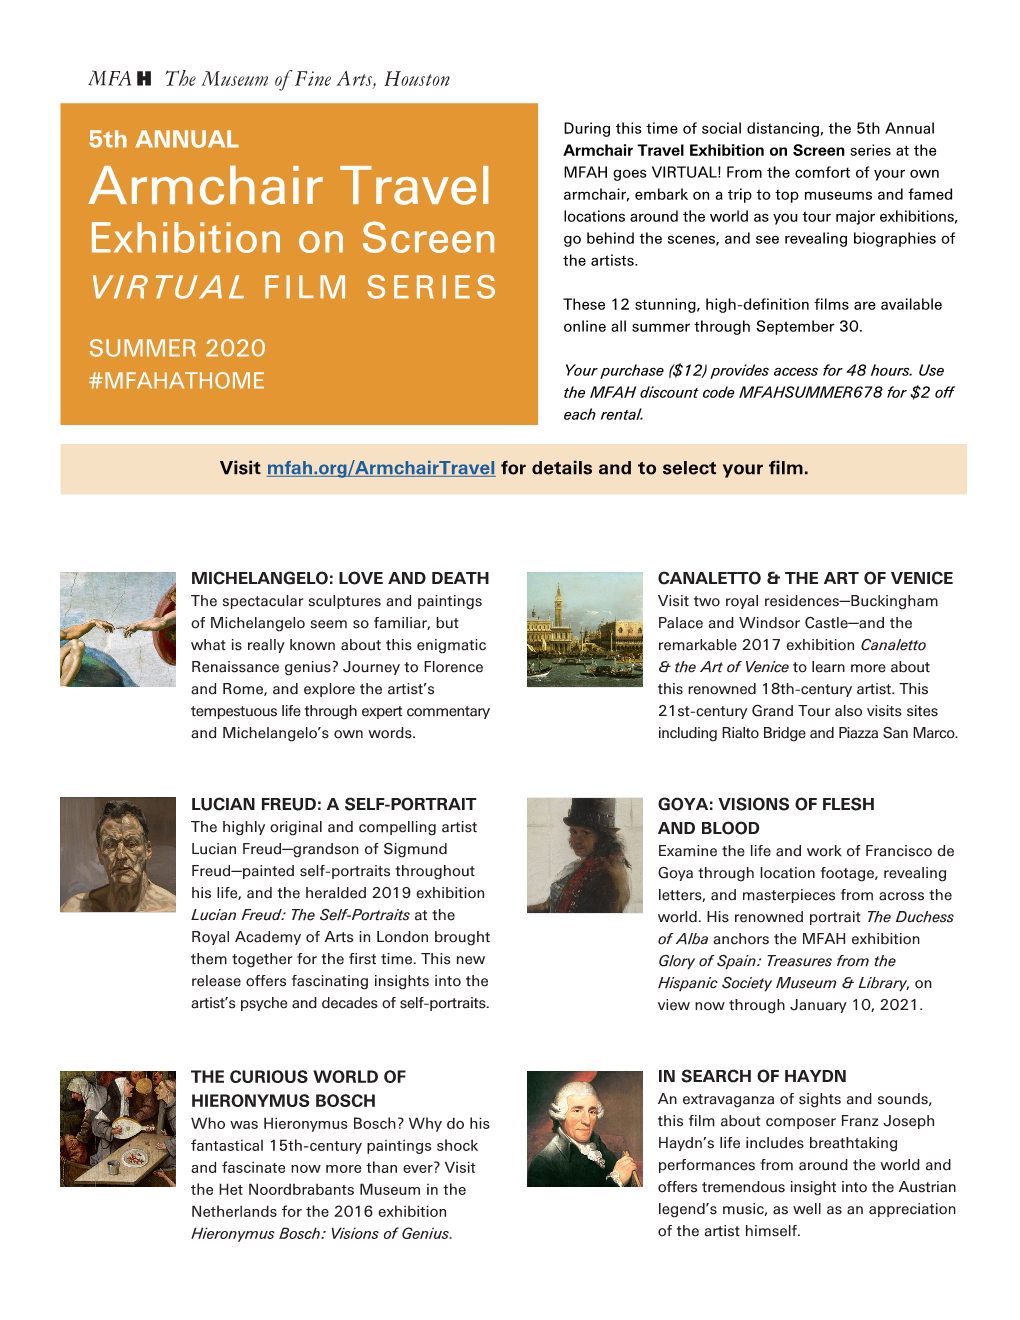 Armchair Travel